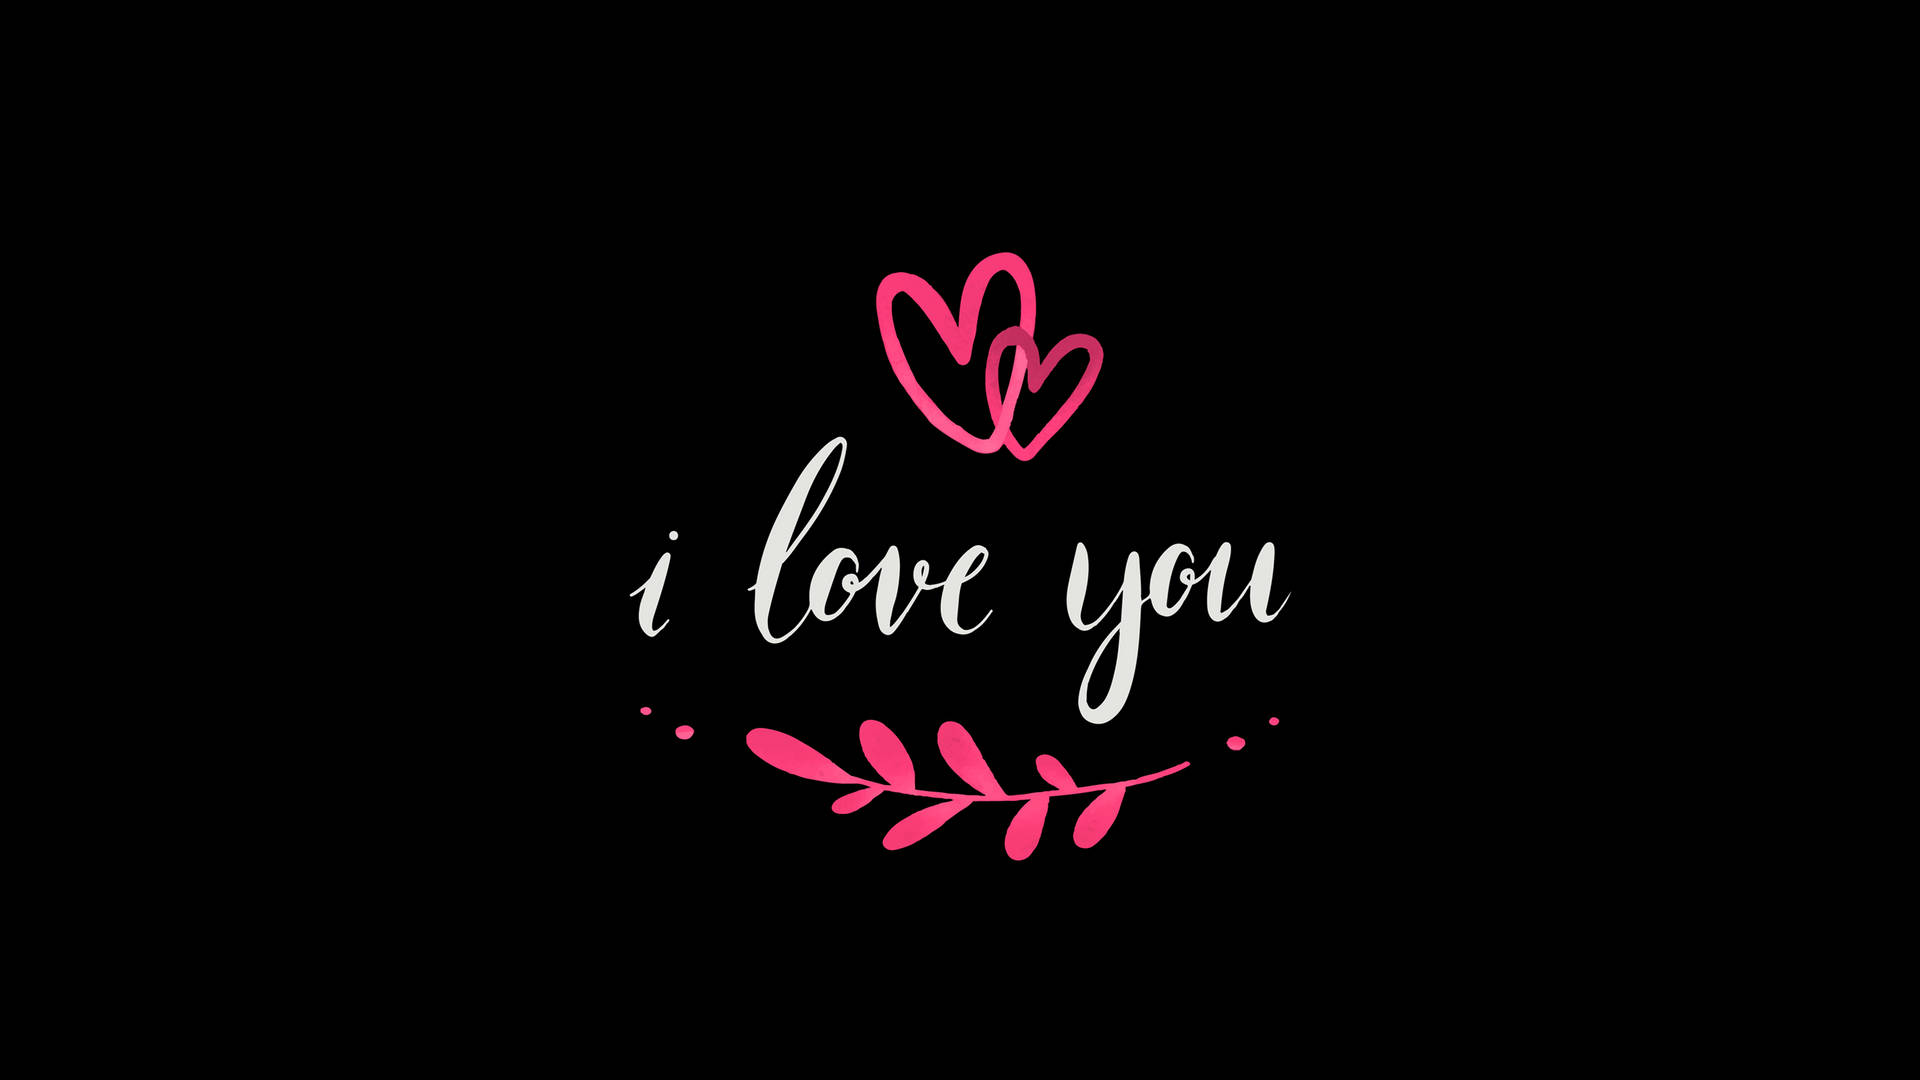 I Love You Pink Hearts Wallpaper